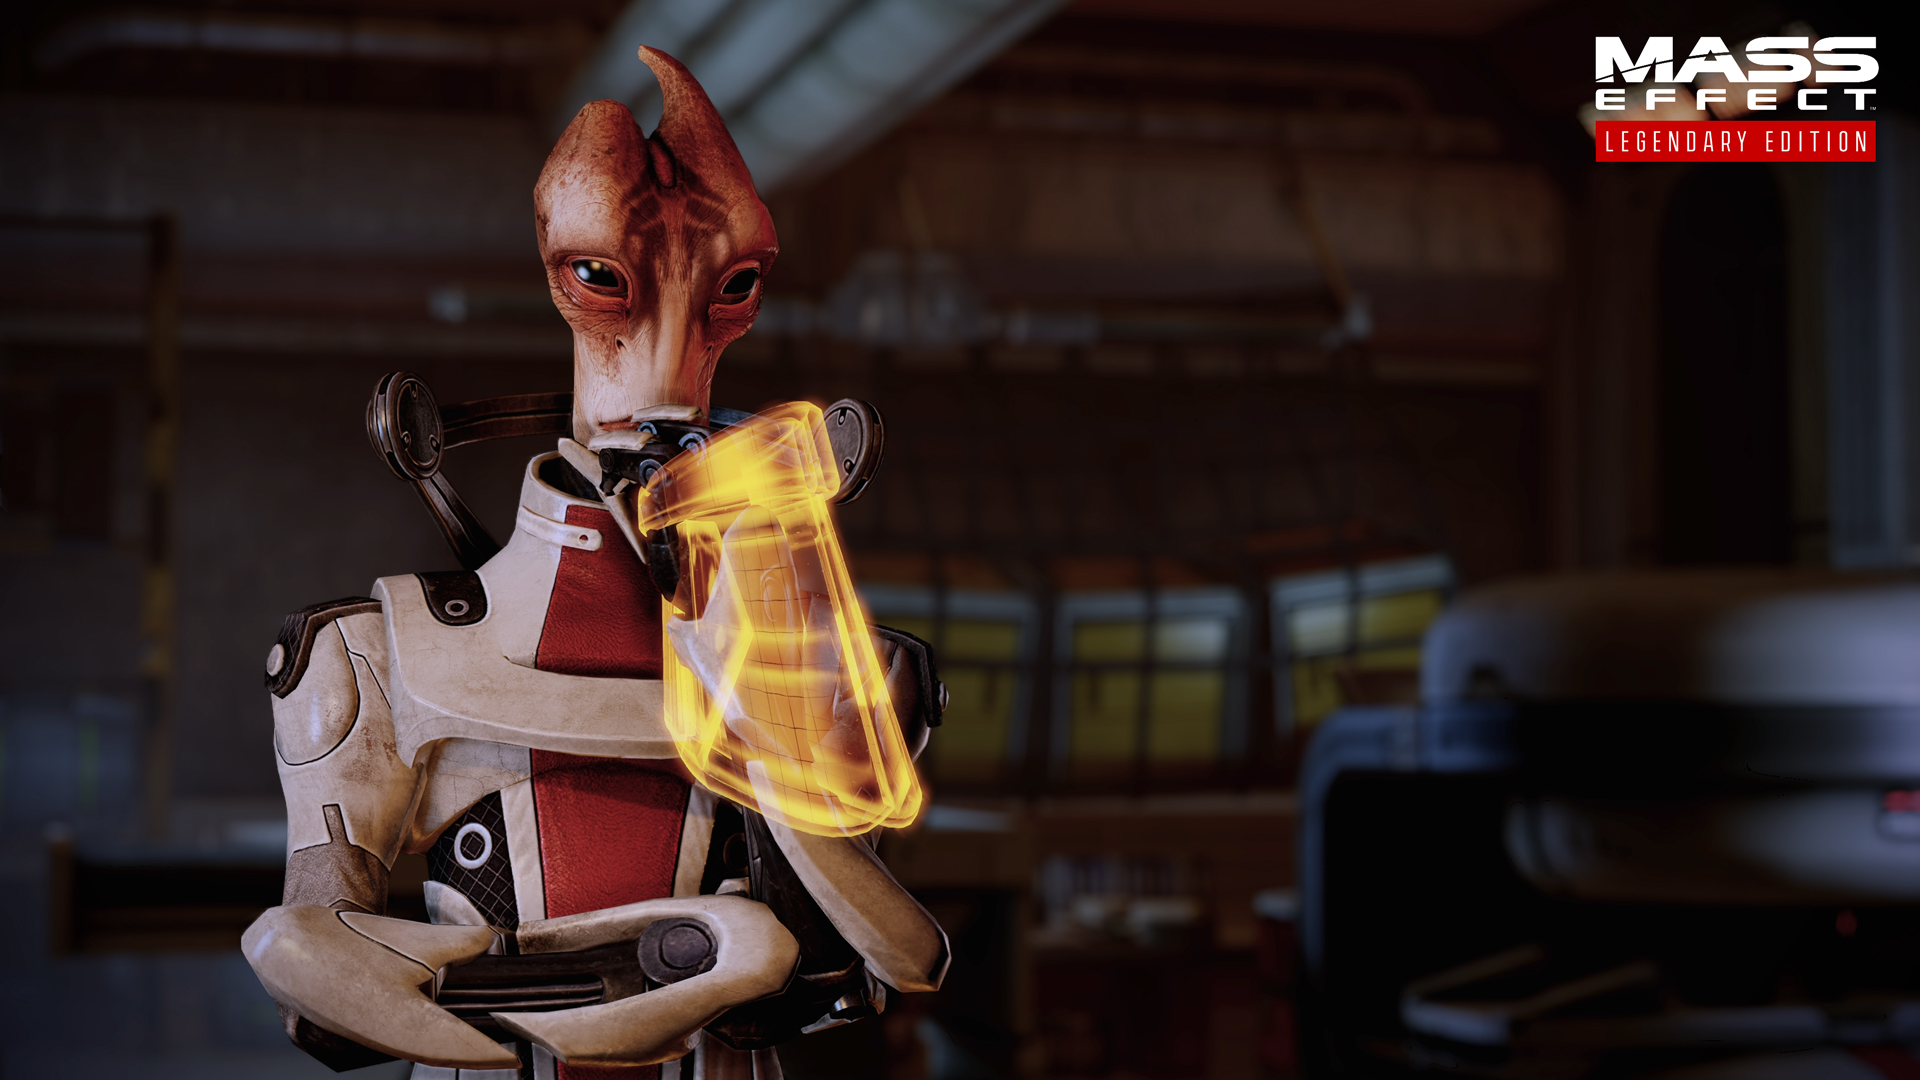 instal the last version for ipod Mass Effect™ издание Legendary